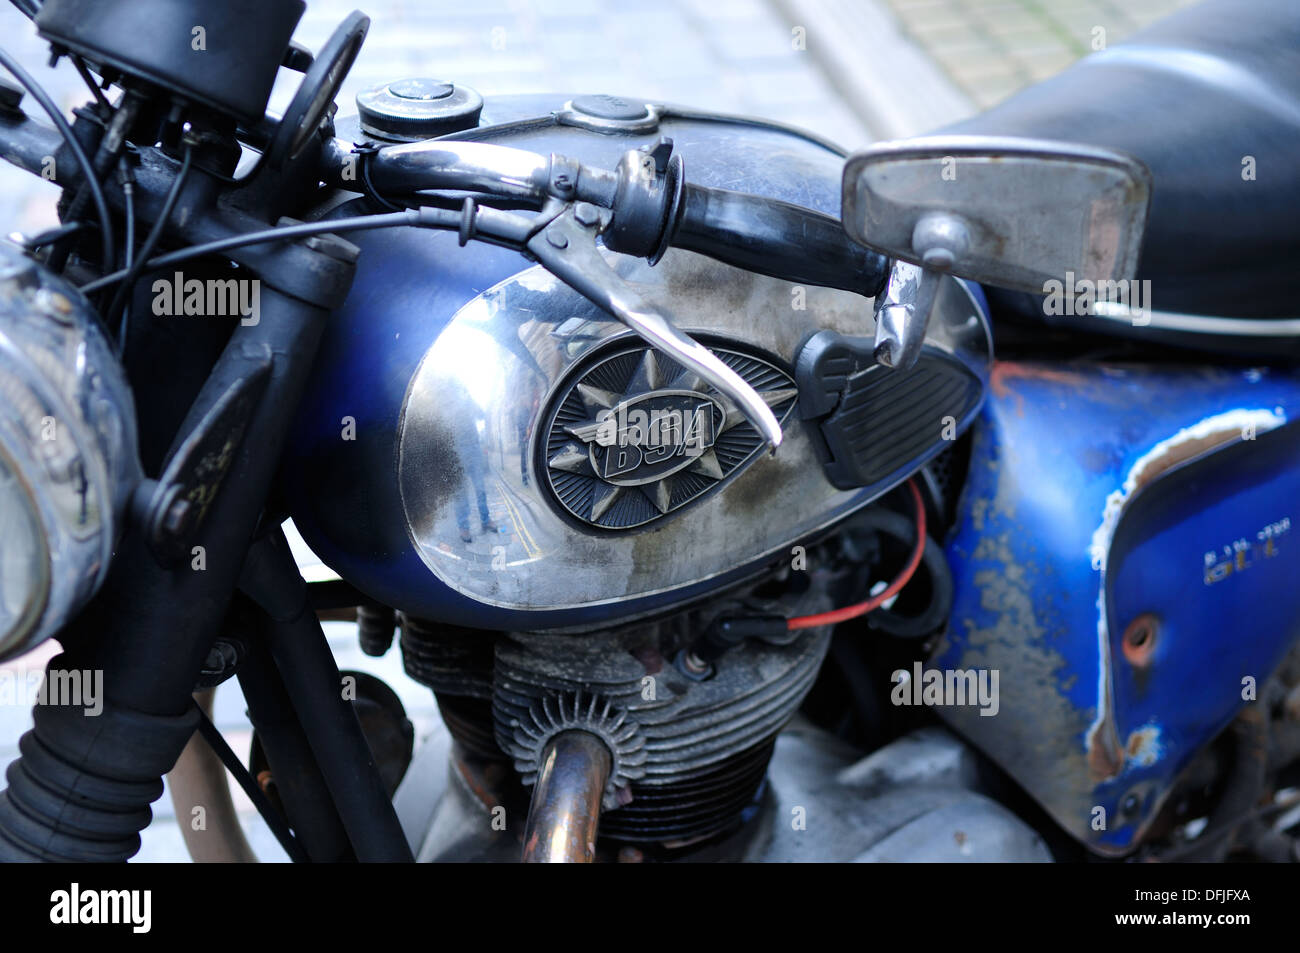 British costruita BSA motocicletta. Foto Stock